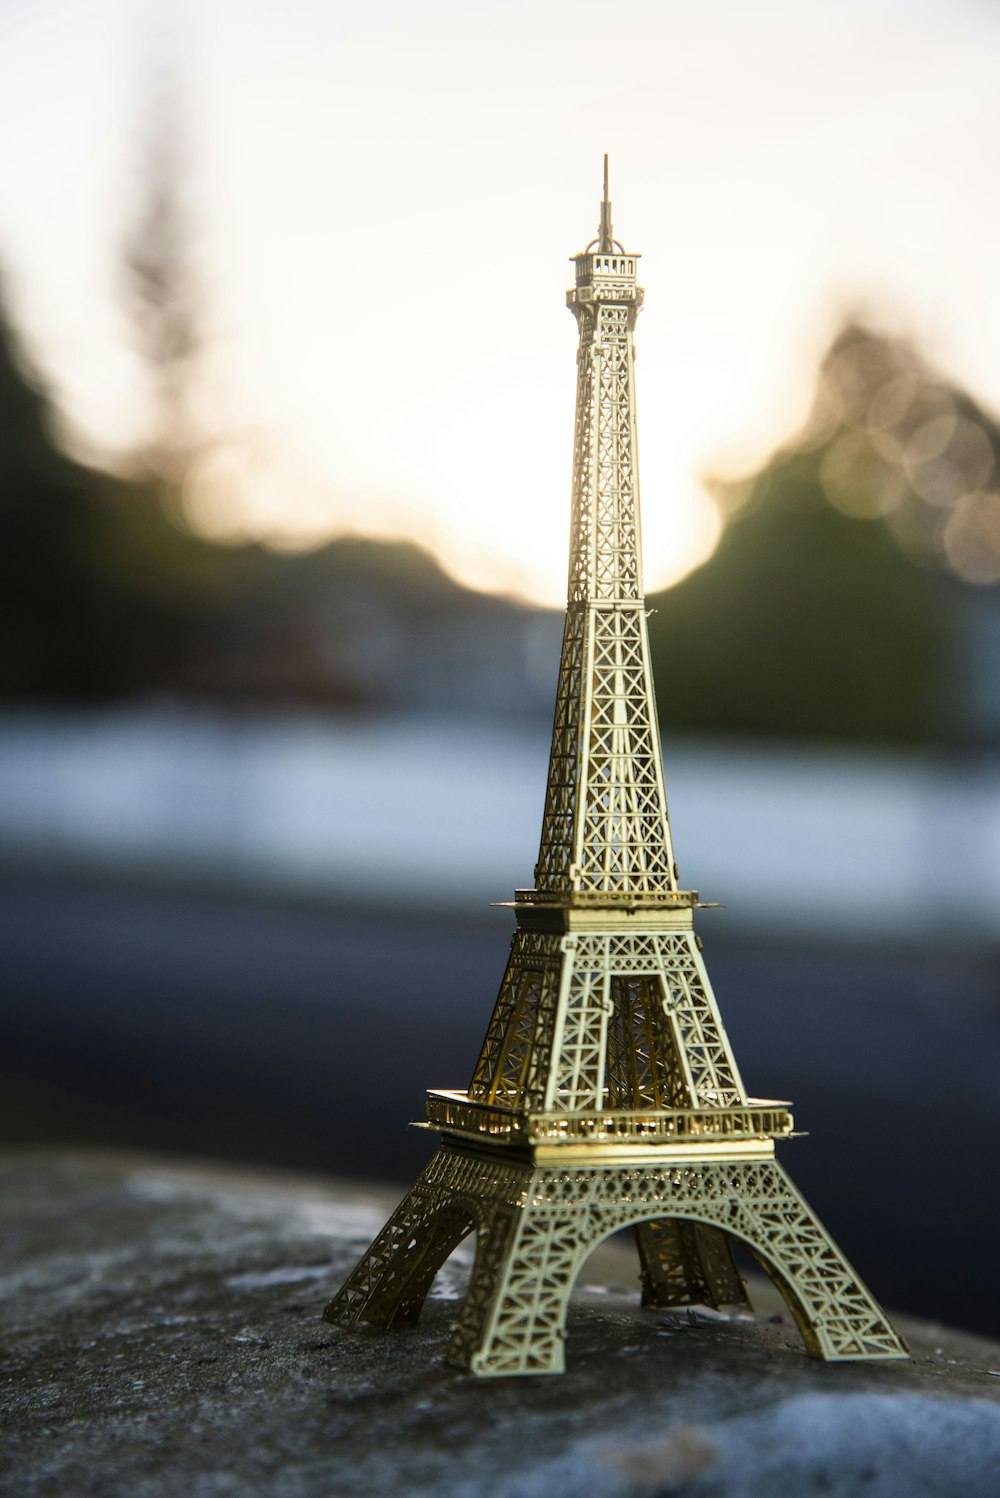 Eiffel Tower miniature photo – Free Architecture Image on Unsplash